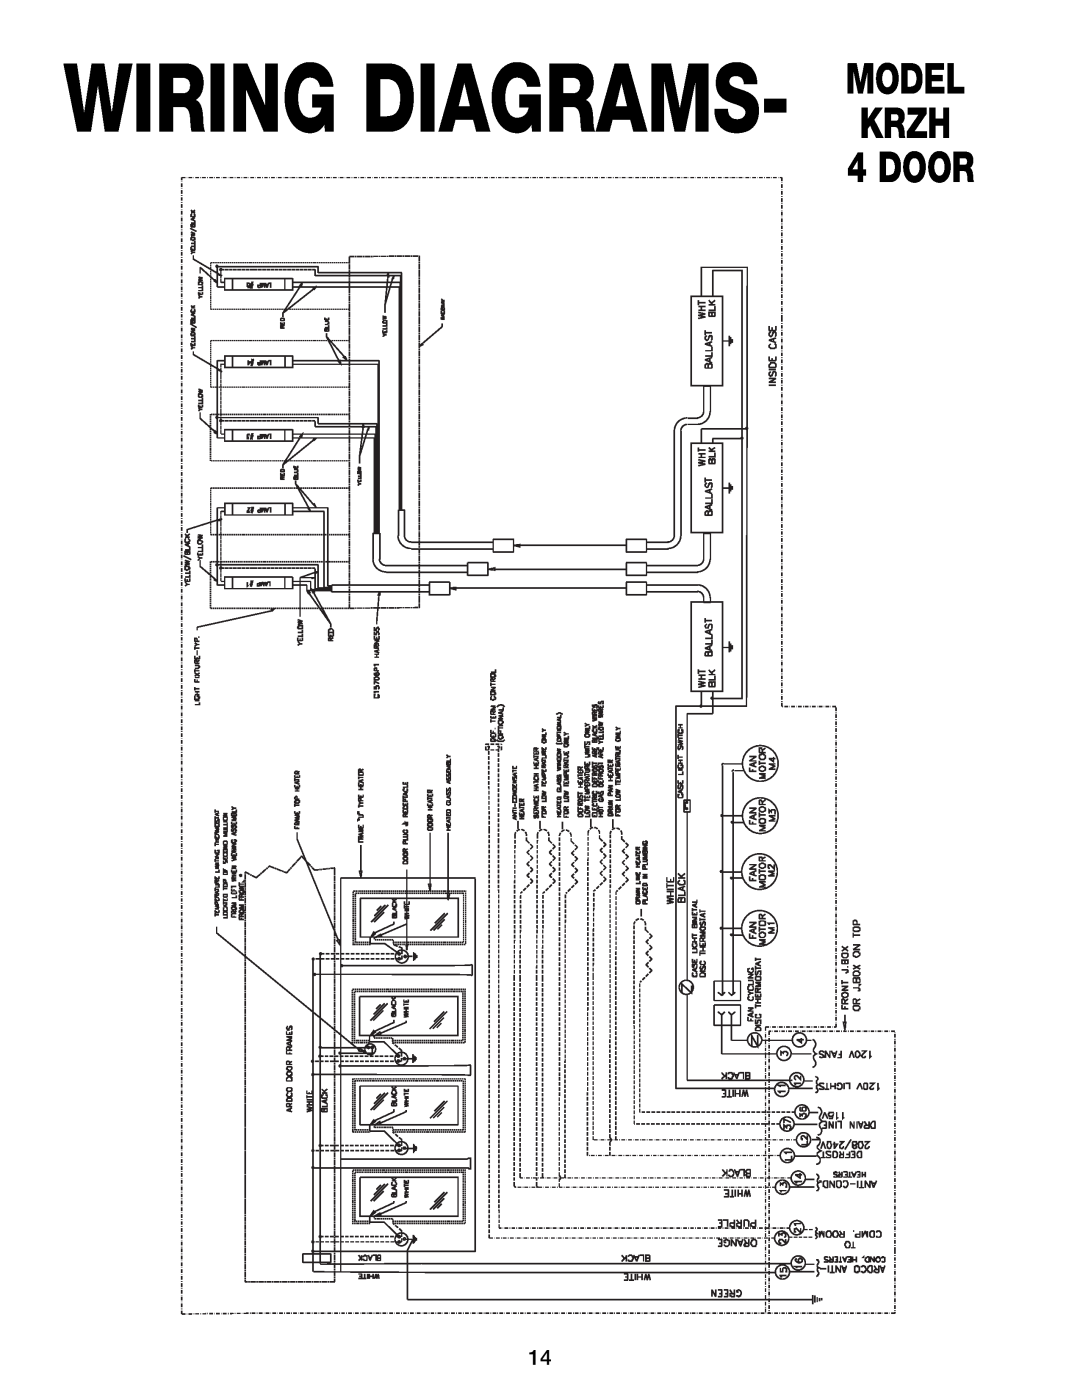 Hill Phoenix KRZH manual Door, Wiring Diagrams- Modelkrzh 